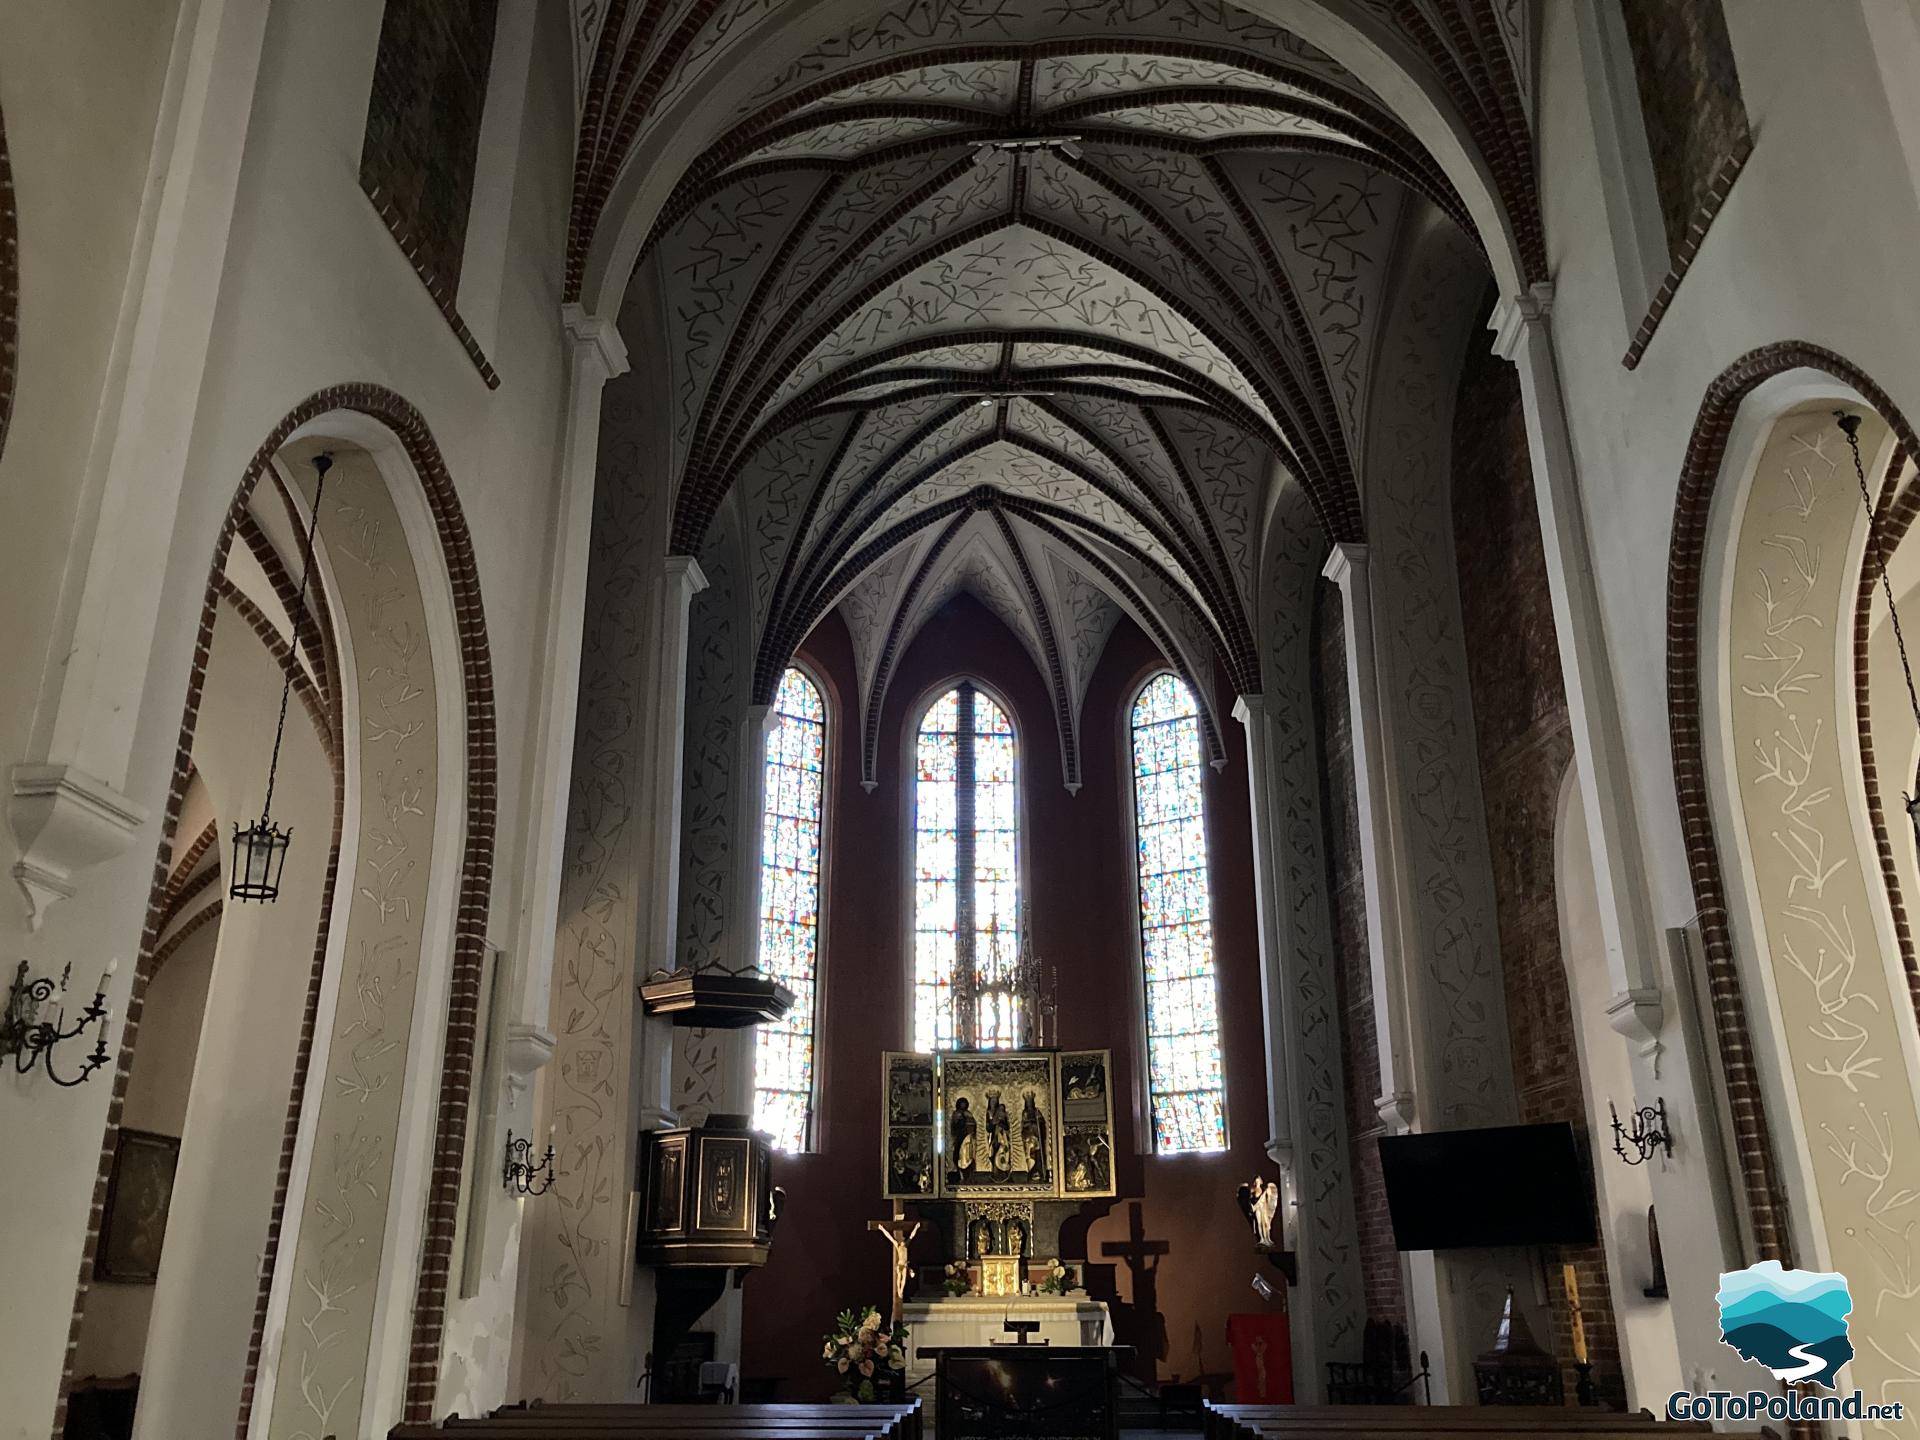 dark interior of a church with a high vault